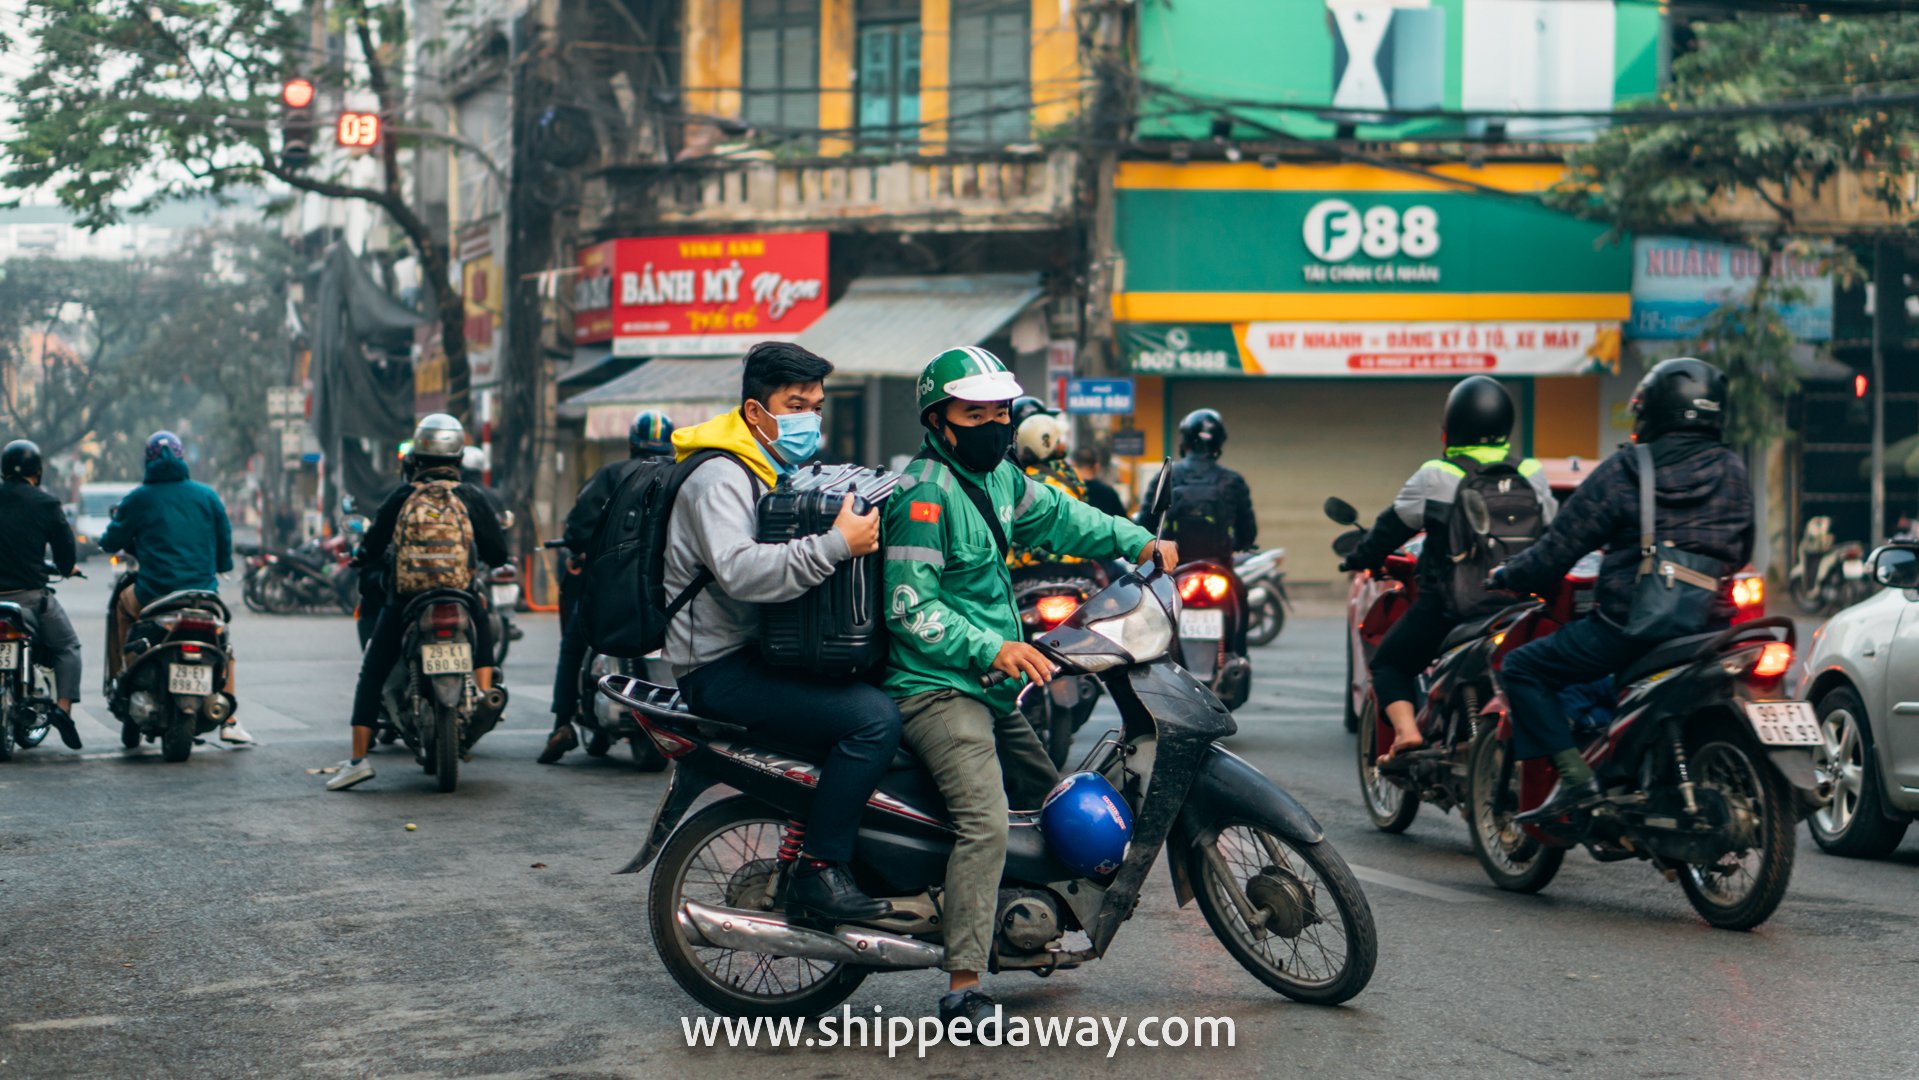 Ordering a grab bike ride with a Vietnam SIM card